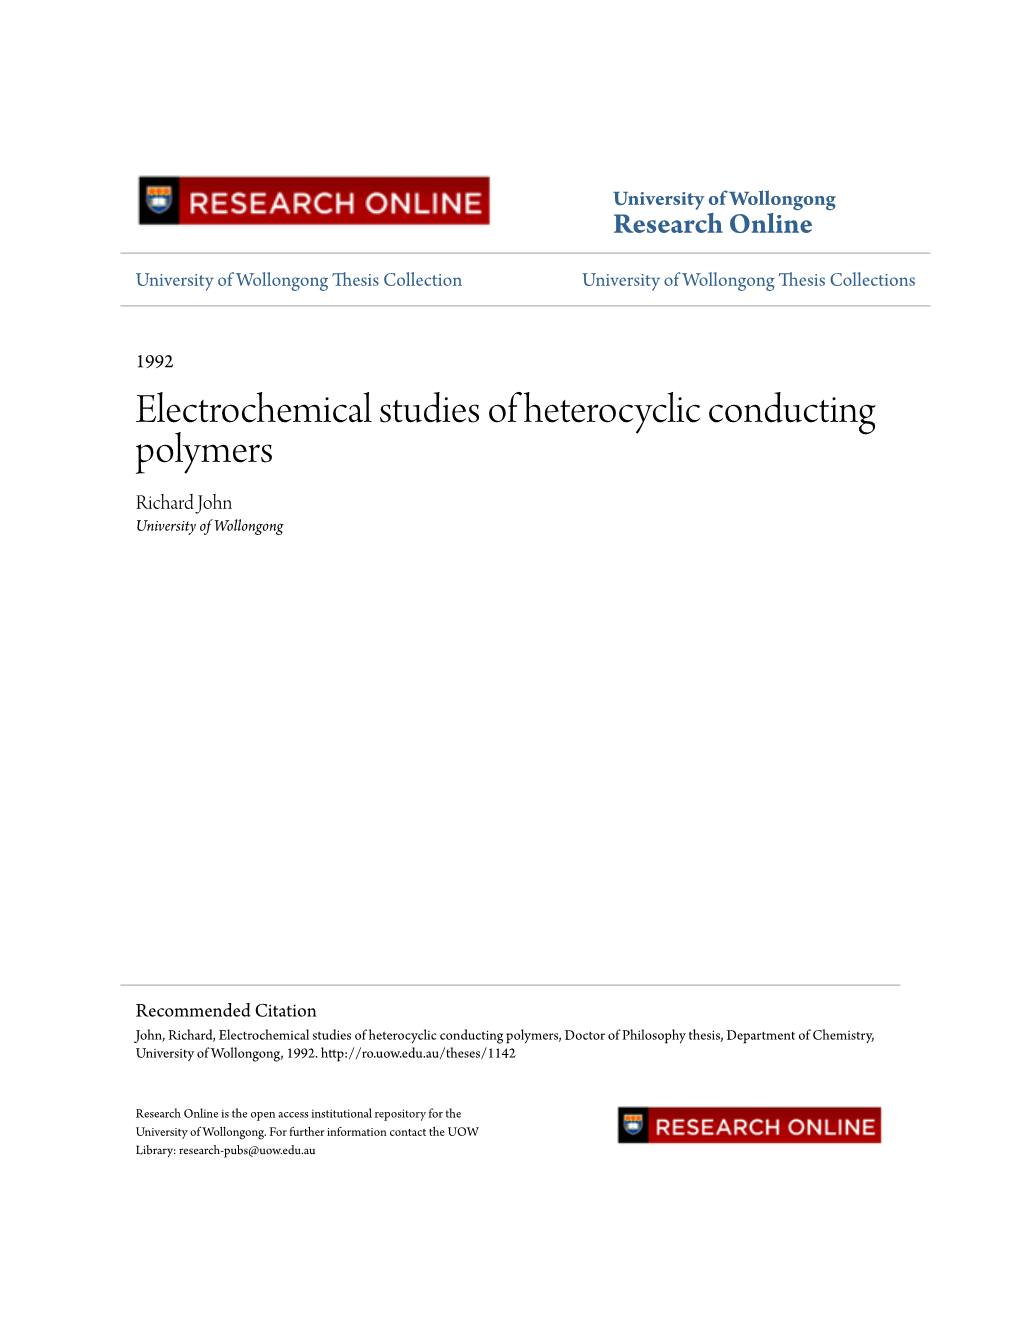 Electrochemical Studies of Heterocyclic Conducting Polymers Richard John University of Wollongong